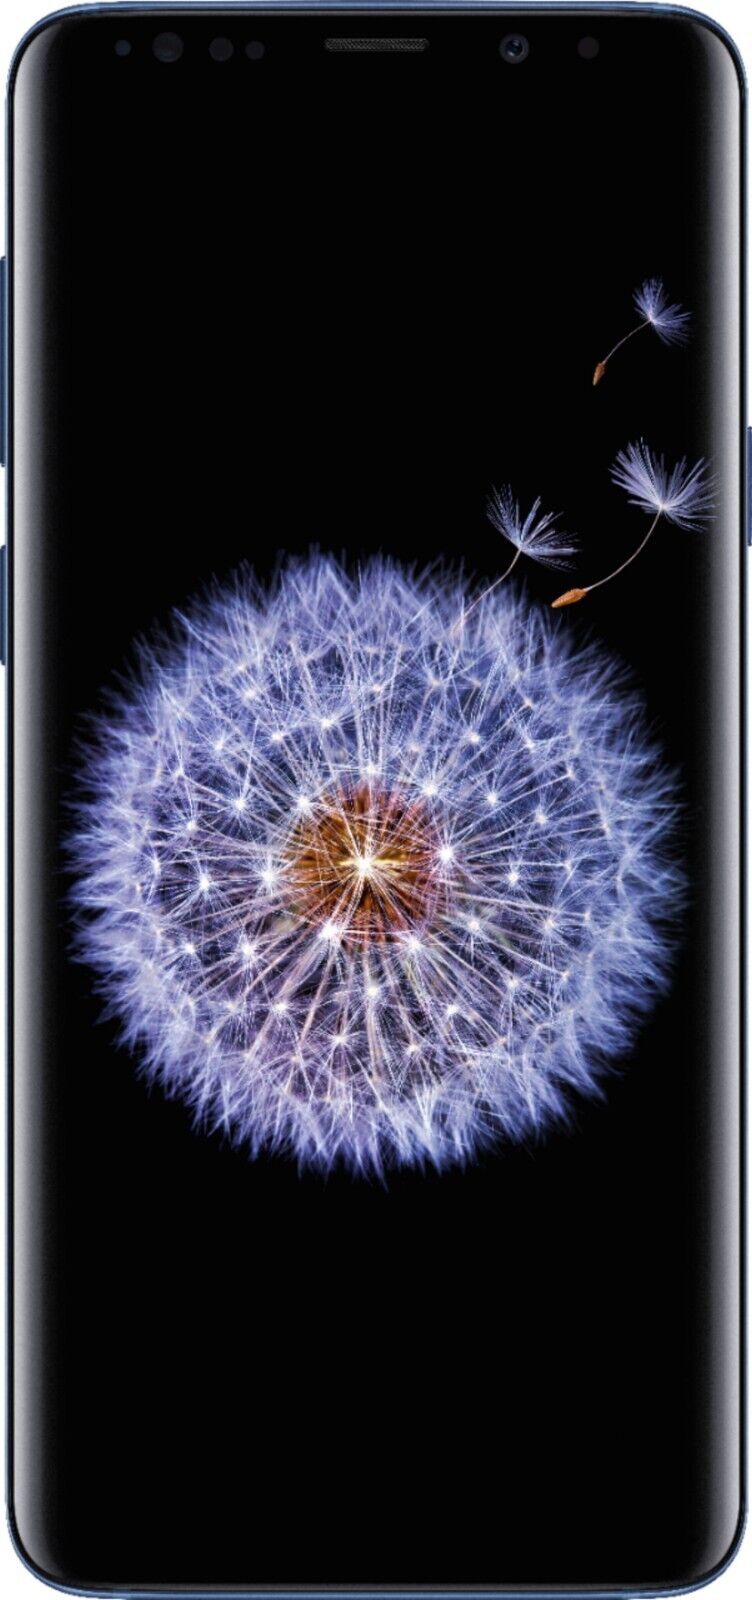 Galaxy S9 64GB - Blue - Locked Sprint